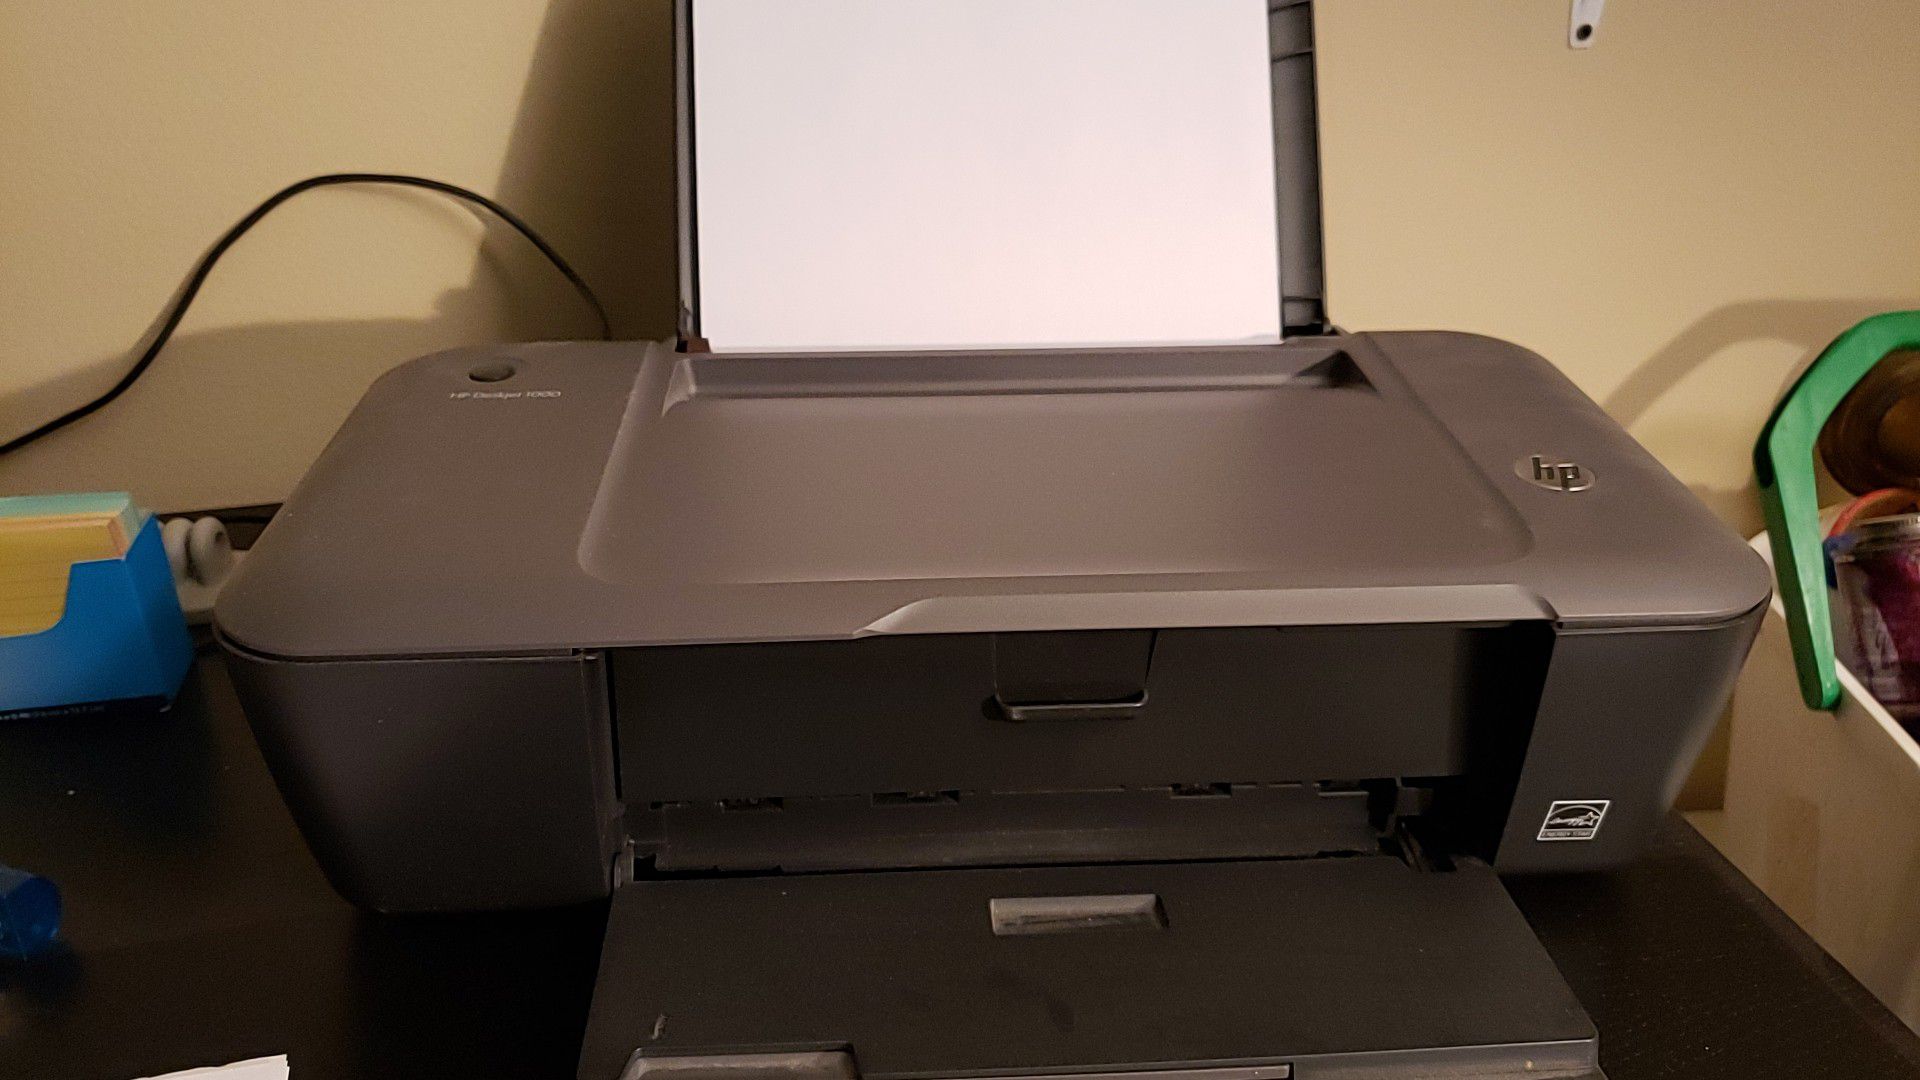 Hp color printer